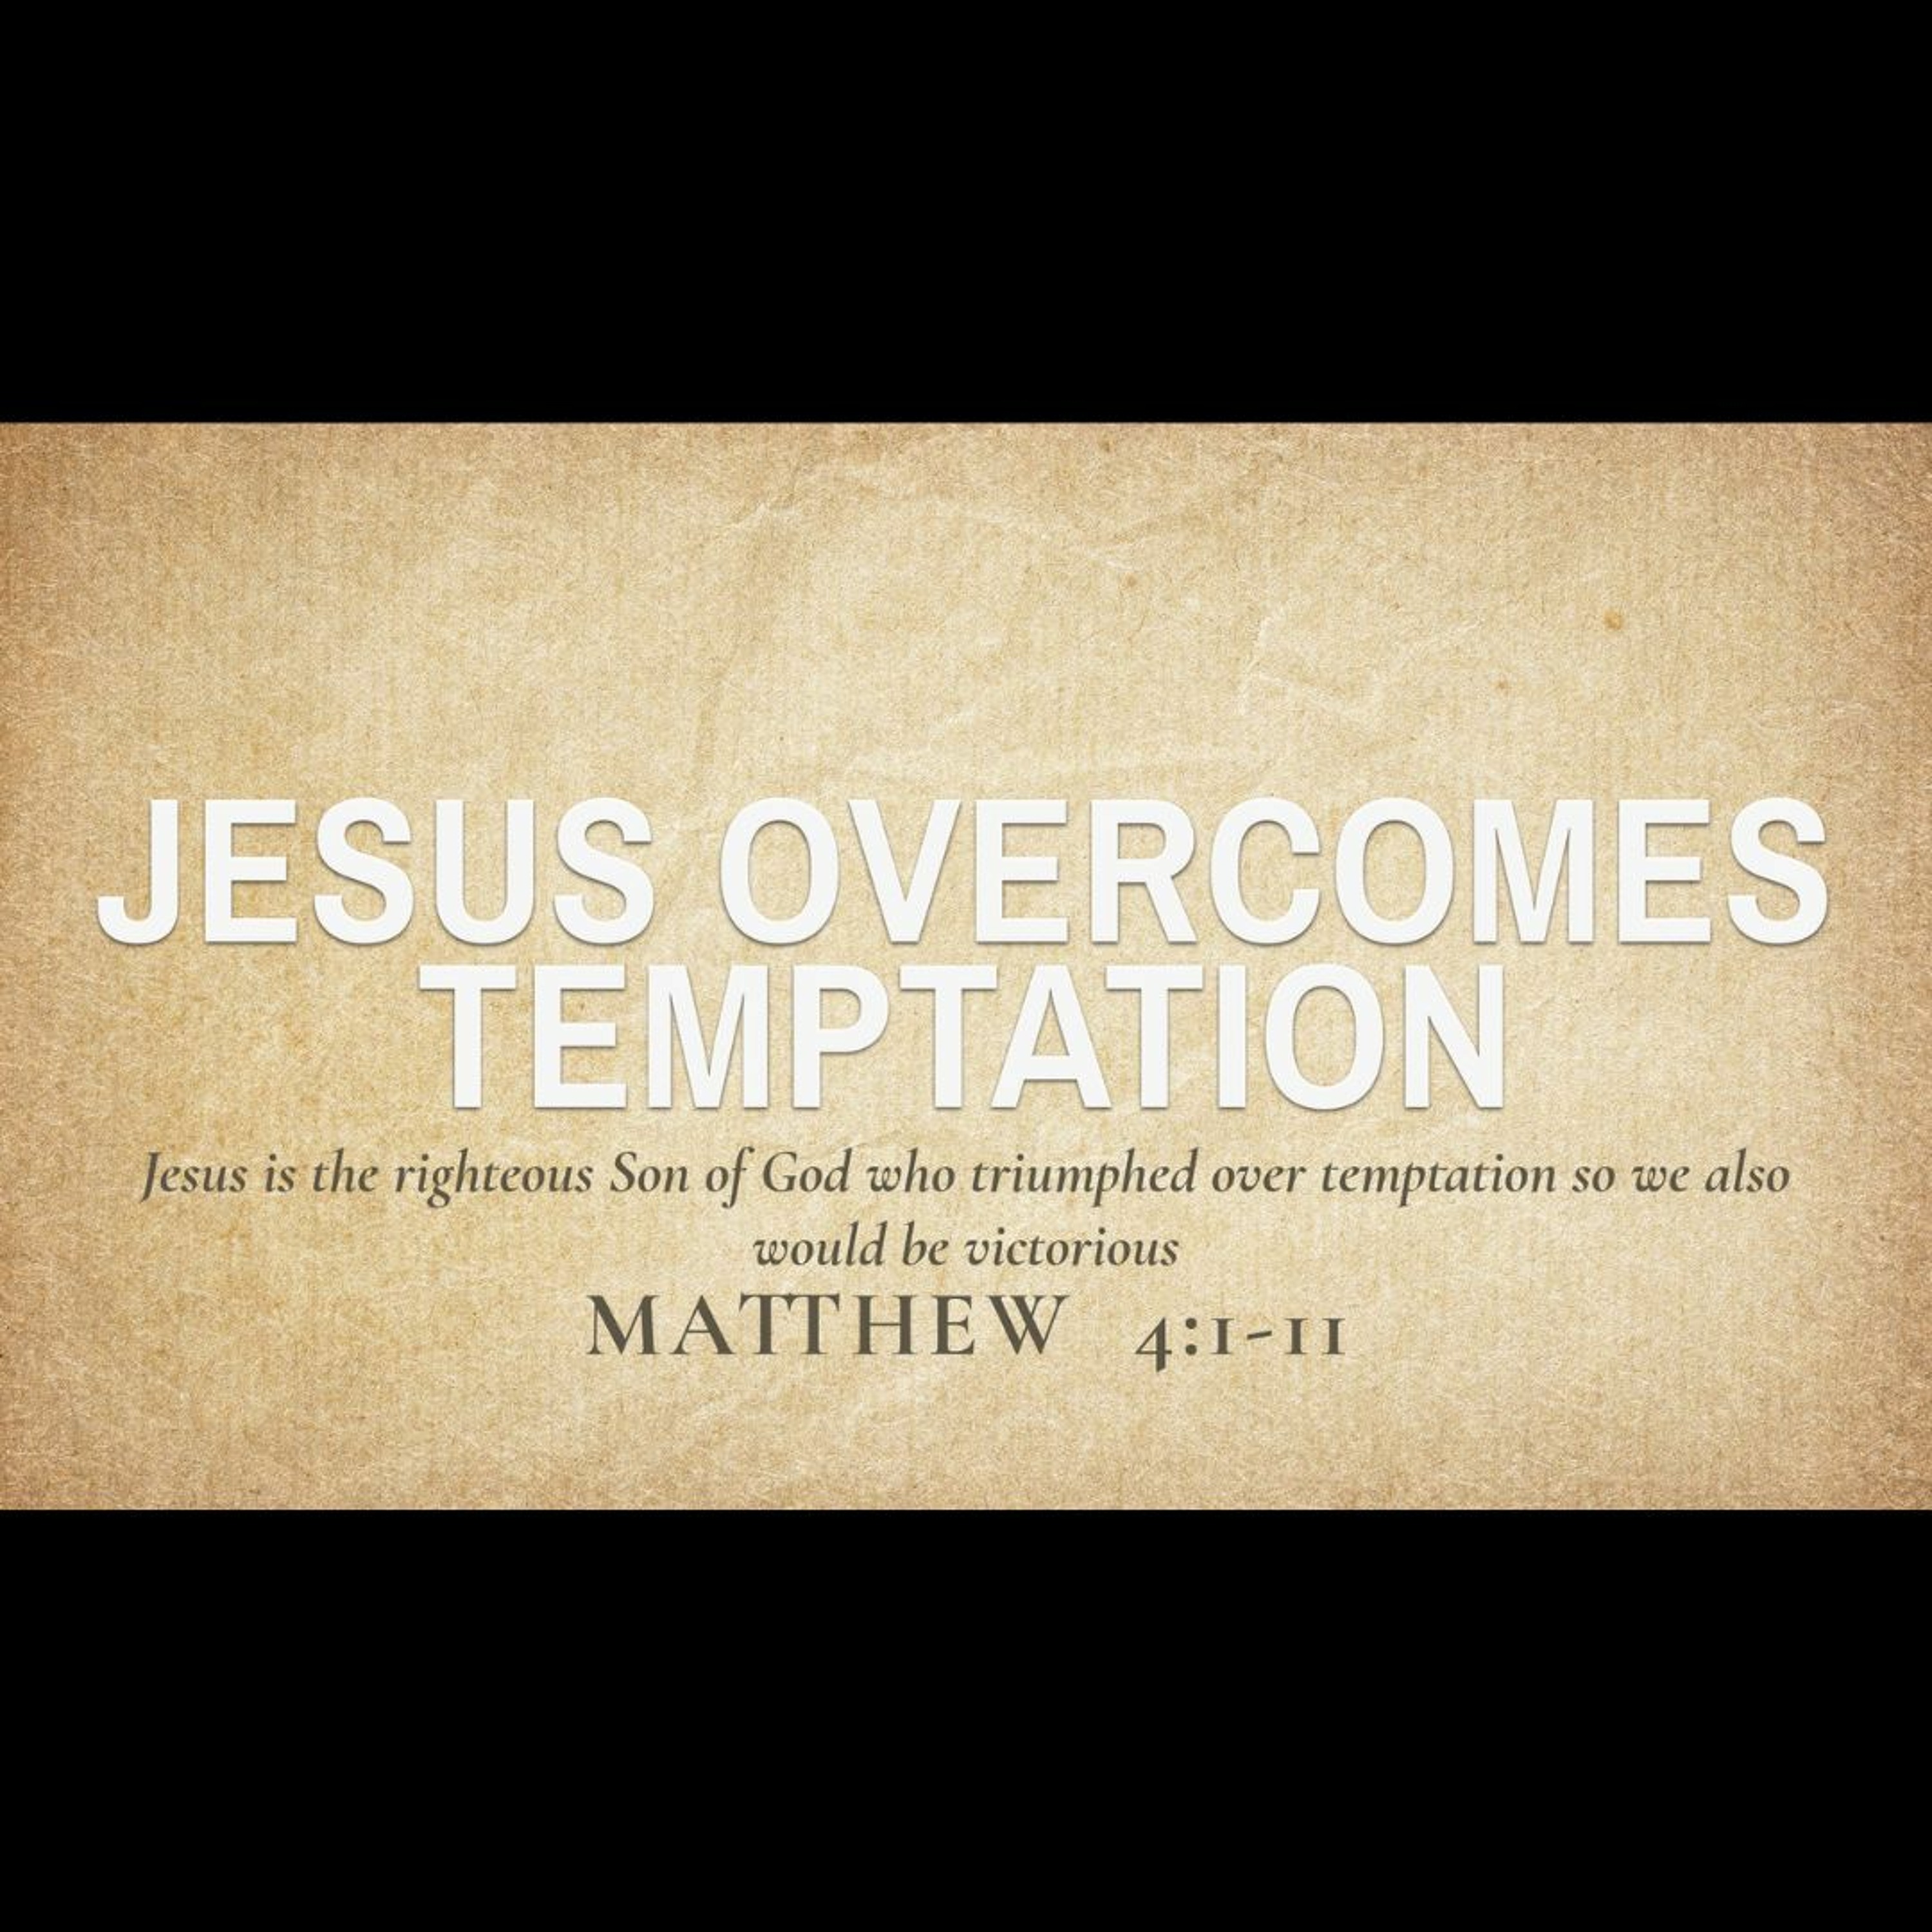 Jesus Overcomes Temptation (Matthew 4:1-11)